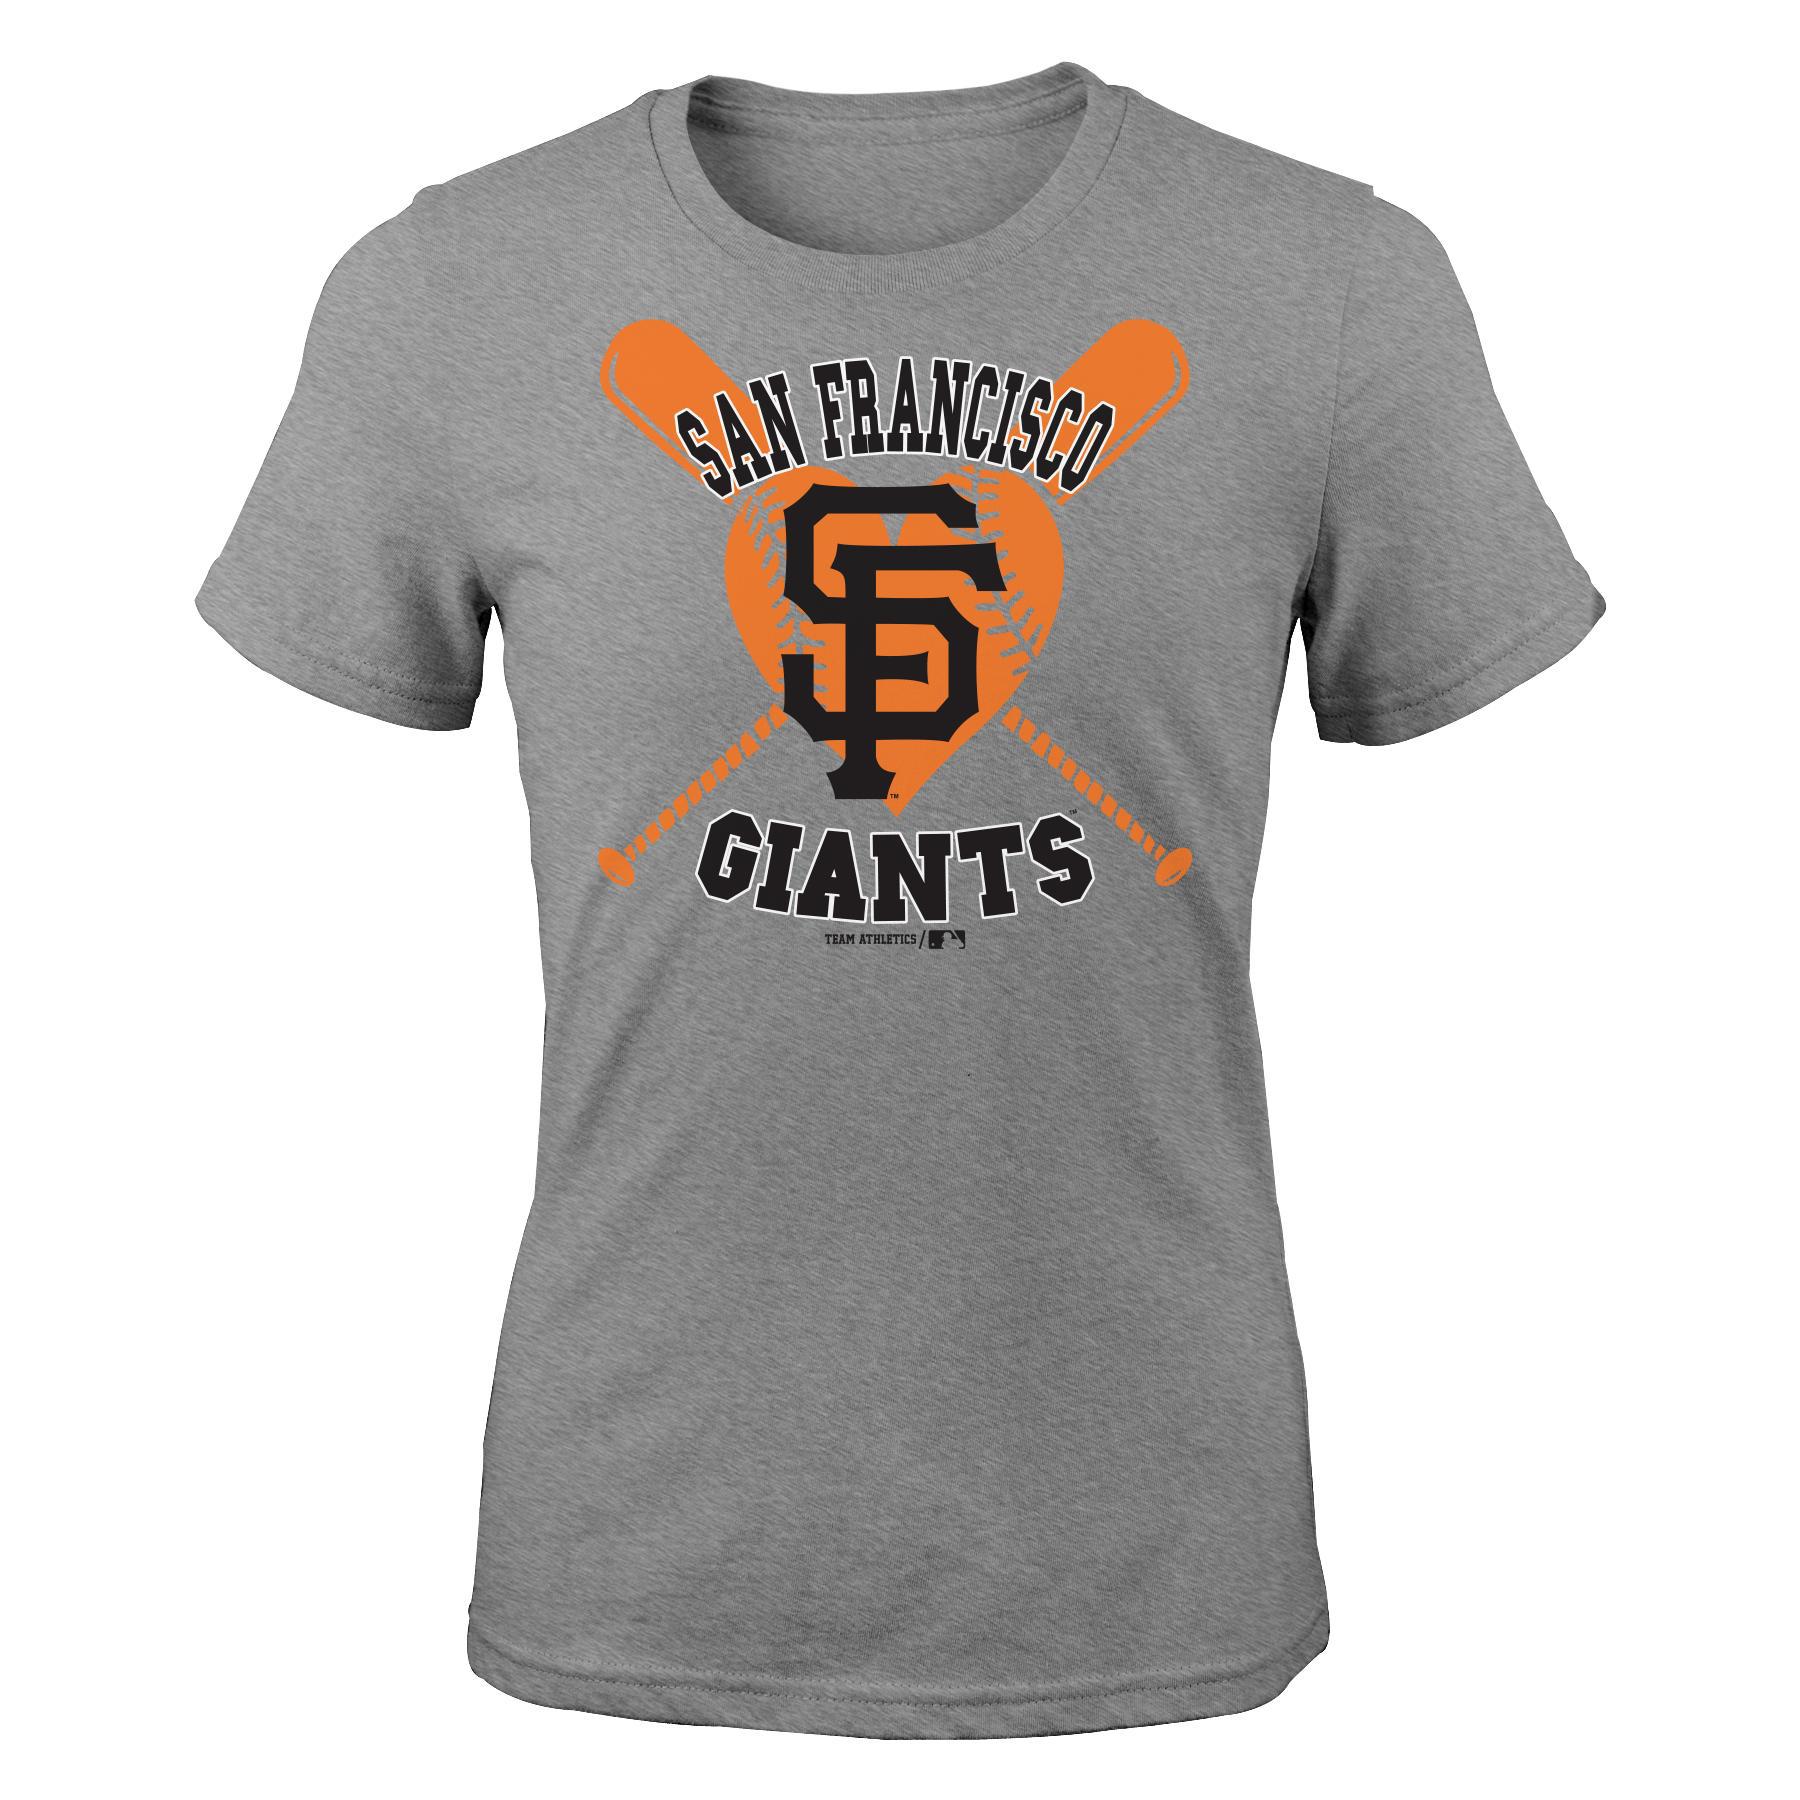 MLB Girls' Graphic T-Shirt - San Francisco Giants